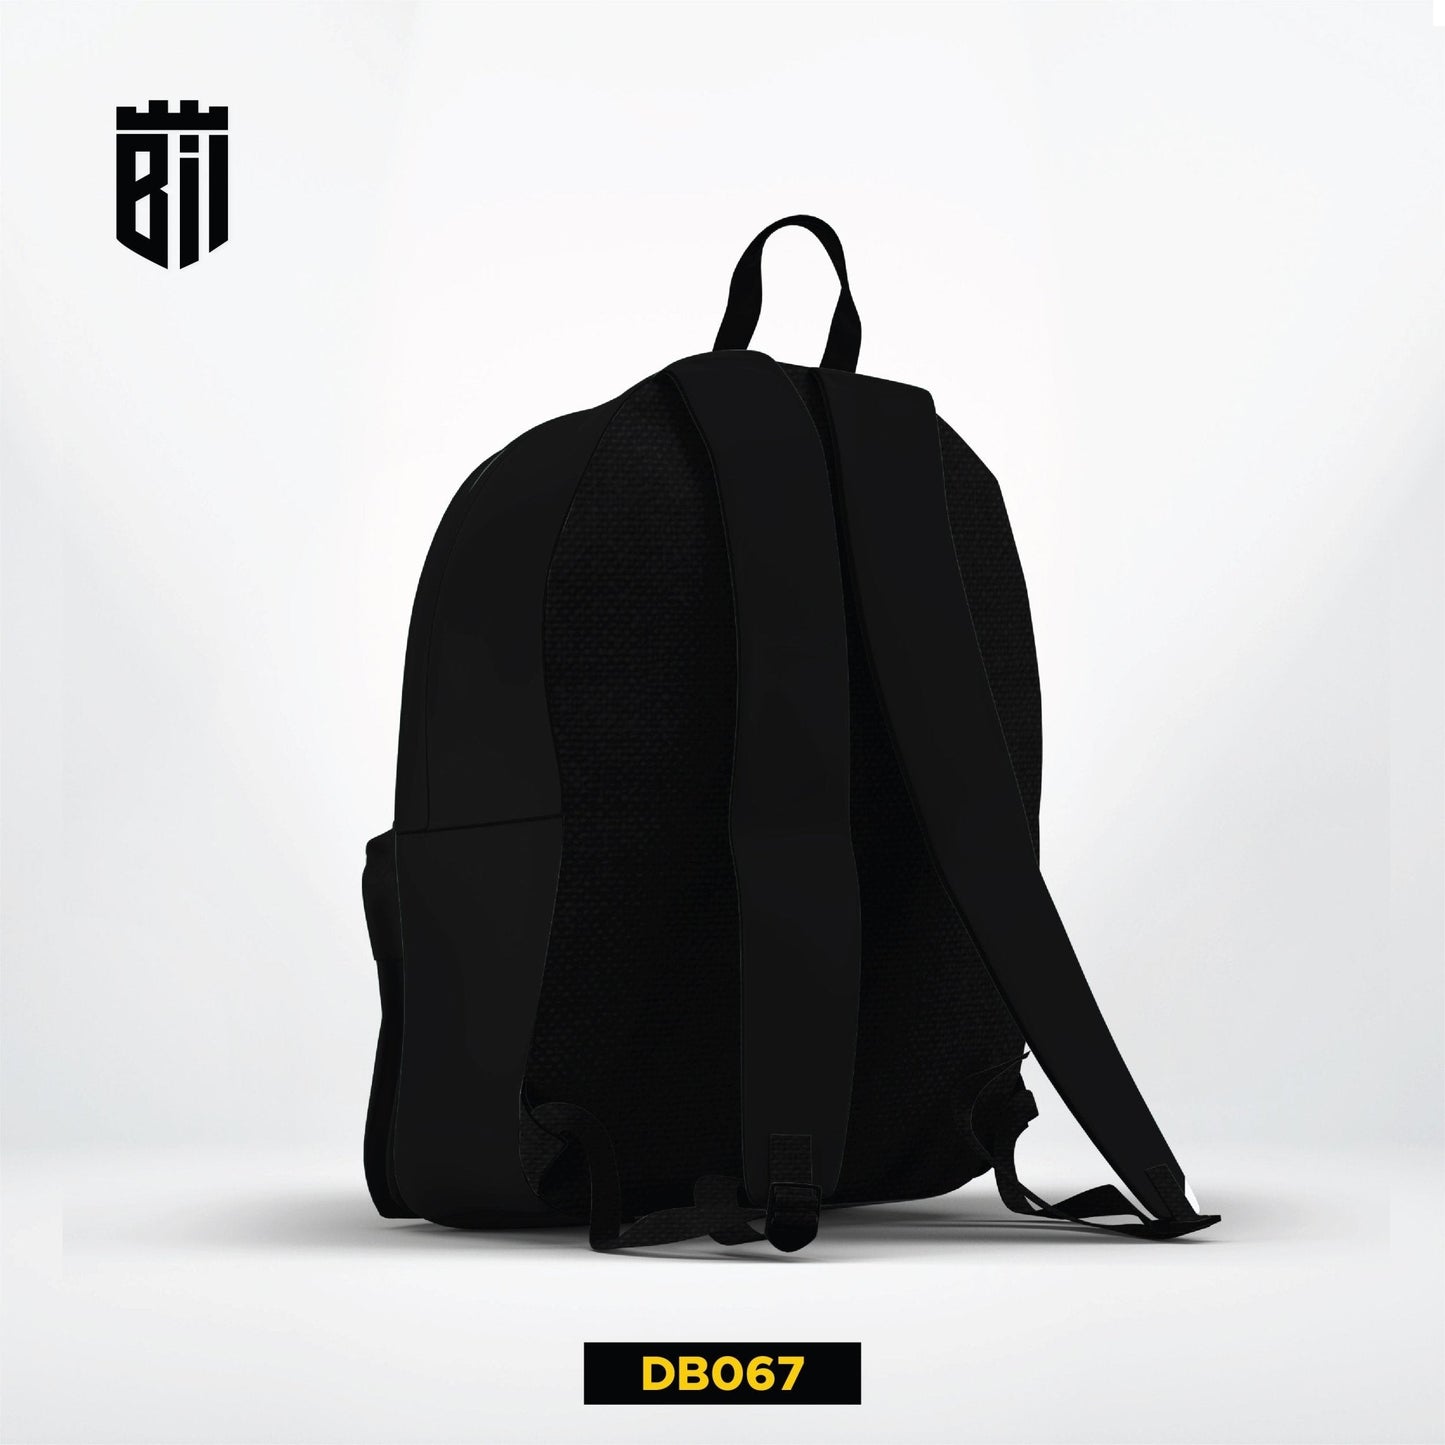 DB067 Black Allover Printed Backpack - BREACHIT